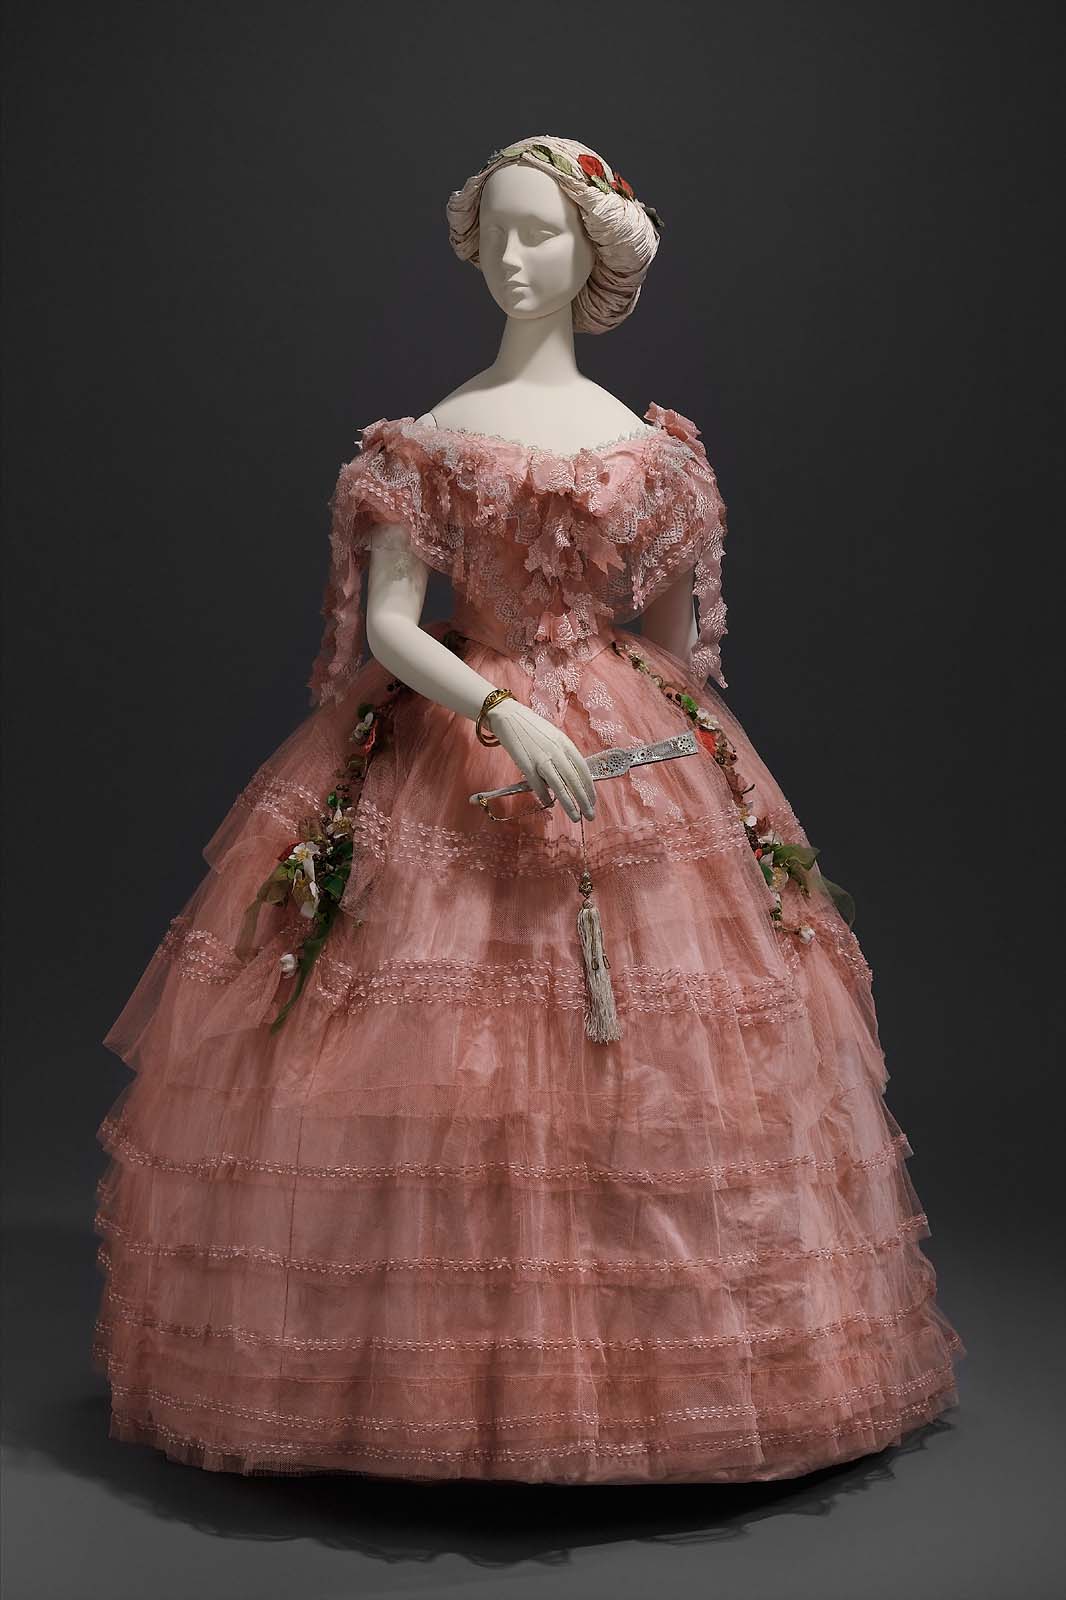 1860 – Cream silk evening dress | Fashion History Timeline